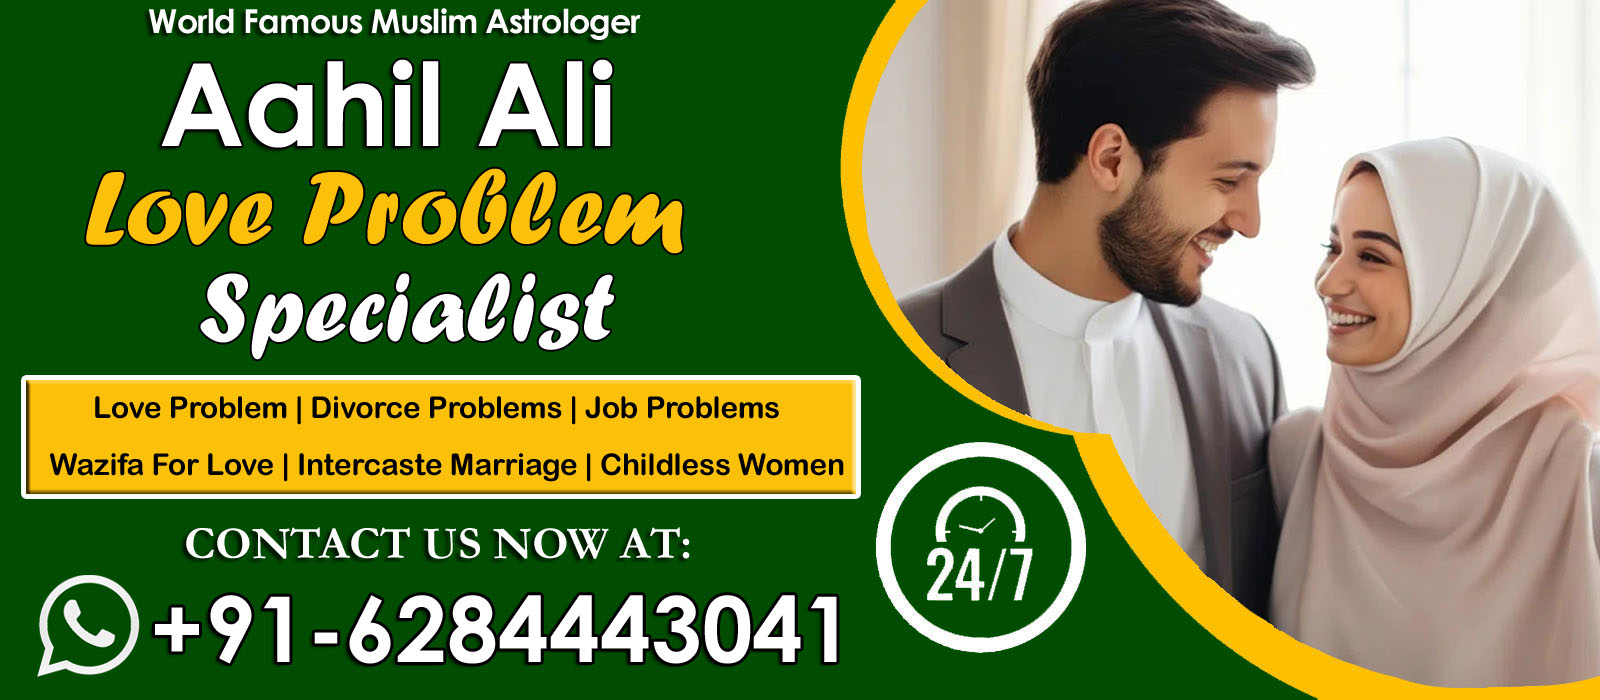 World Famous Astrologer Aahil Ali Ji +91-6284443041 